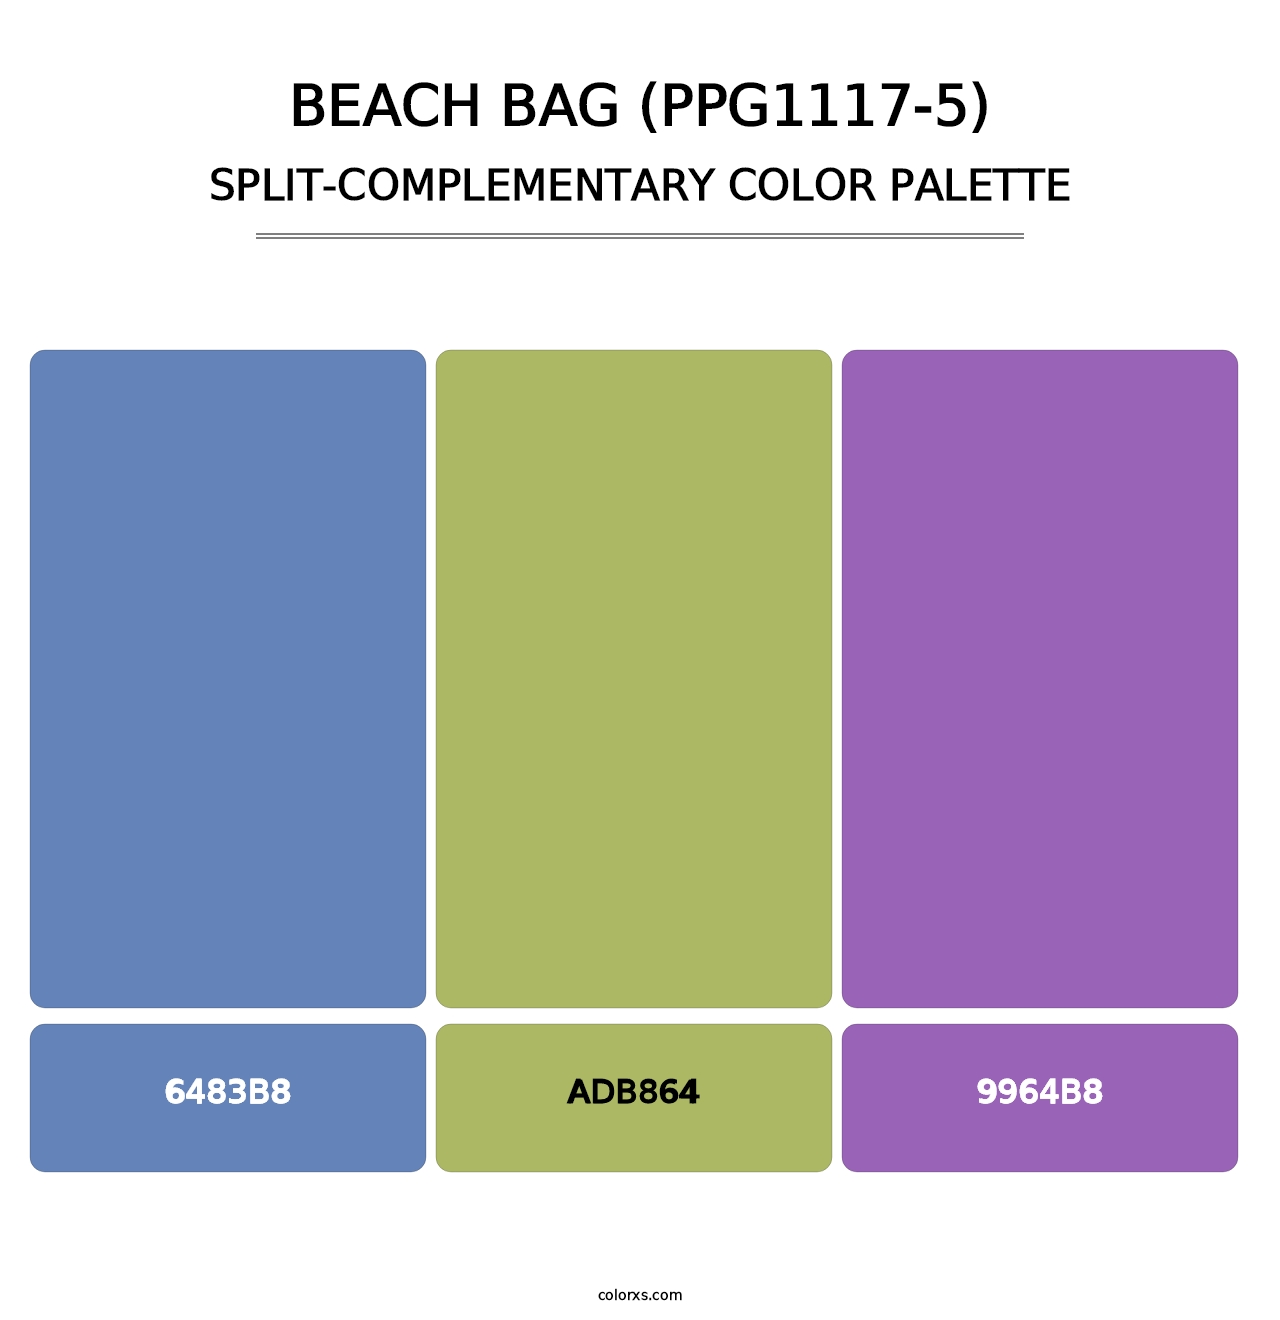 Beach Bag (PPG1117-5) - Split-Complementary Color Palette